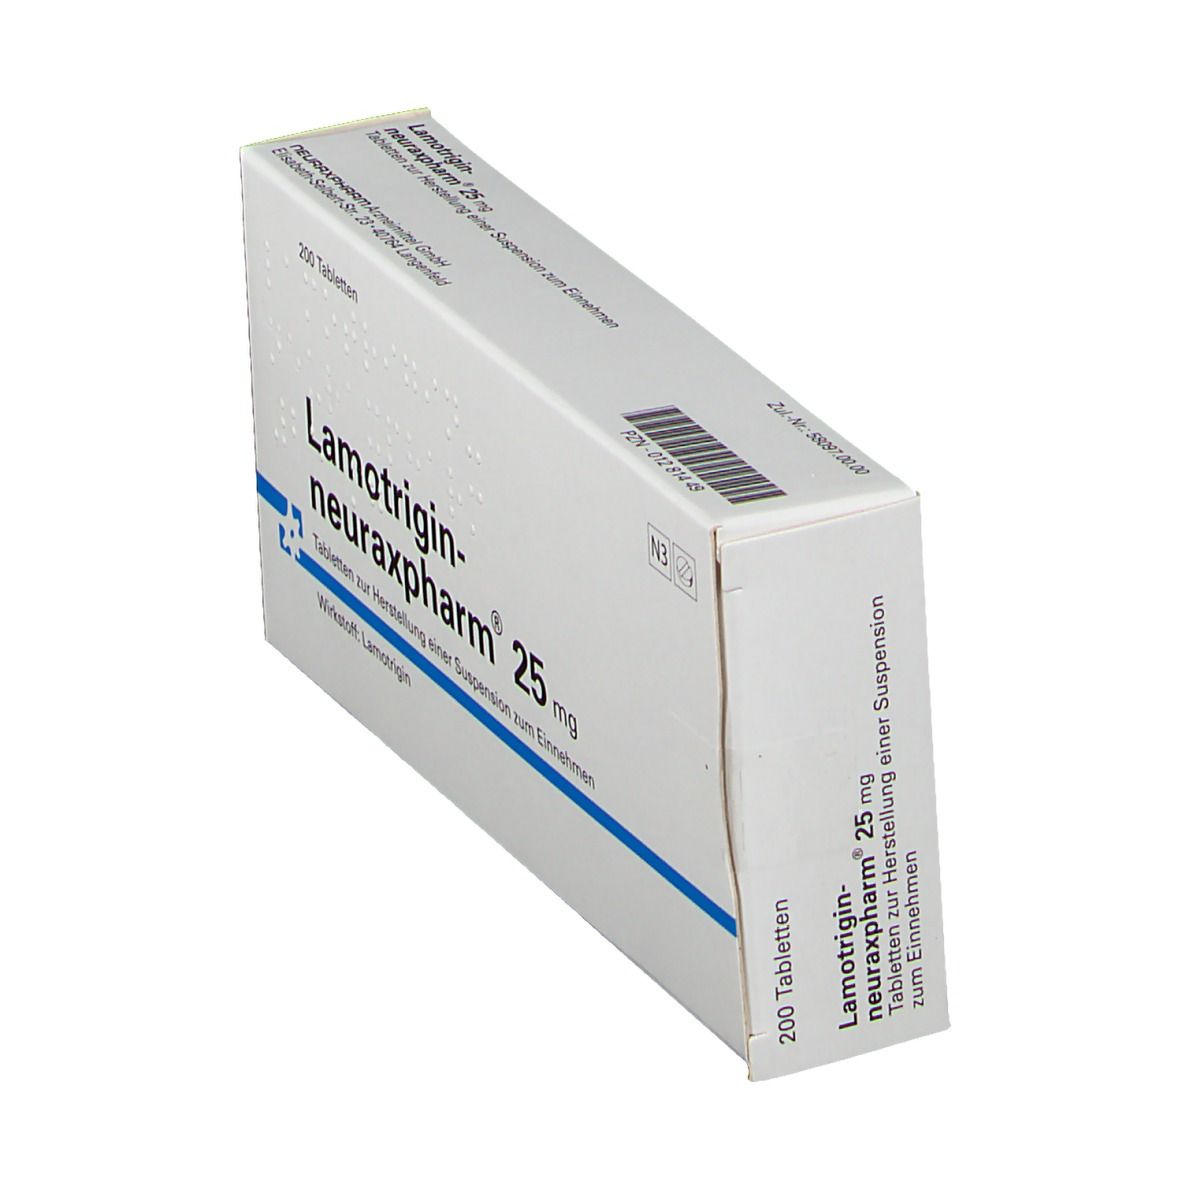 Lamotrigin-neuraxpharm® 25 mg